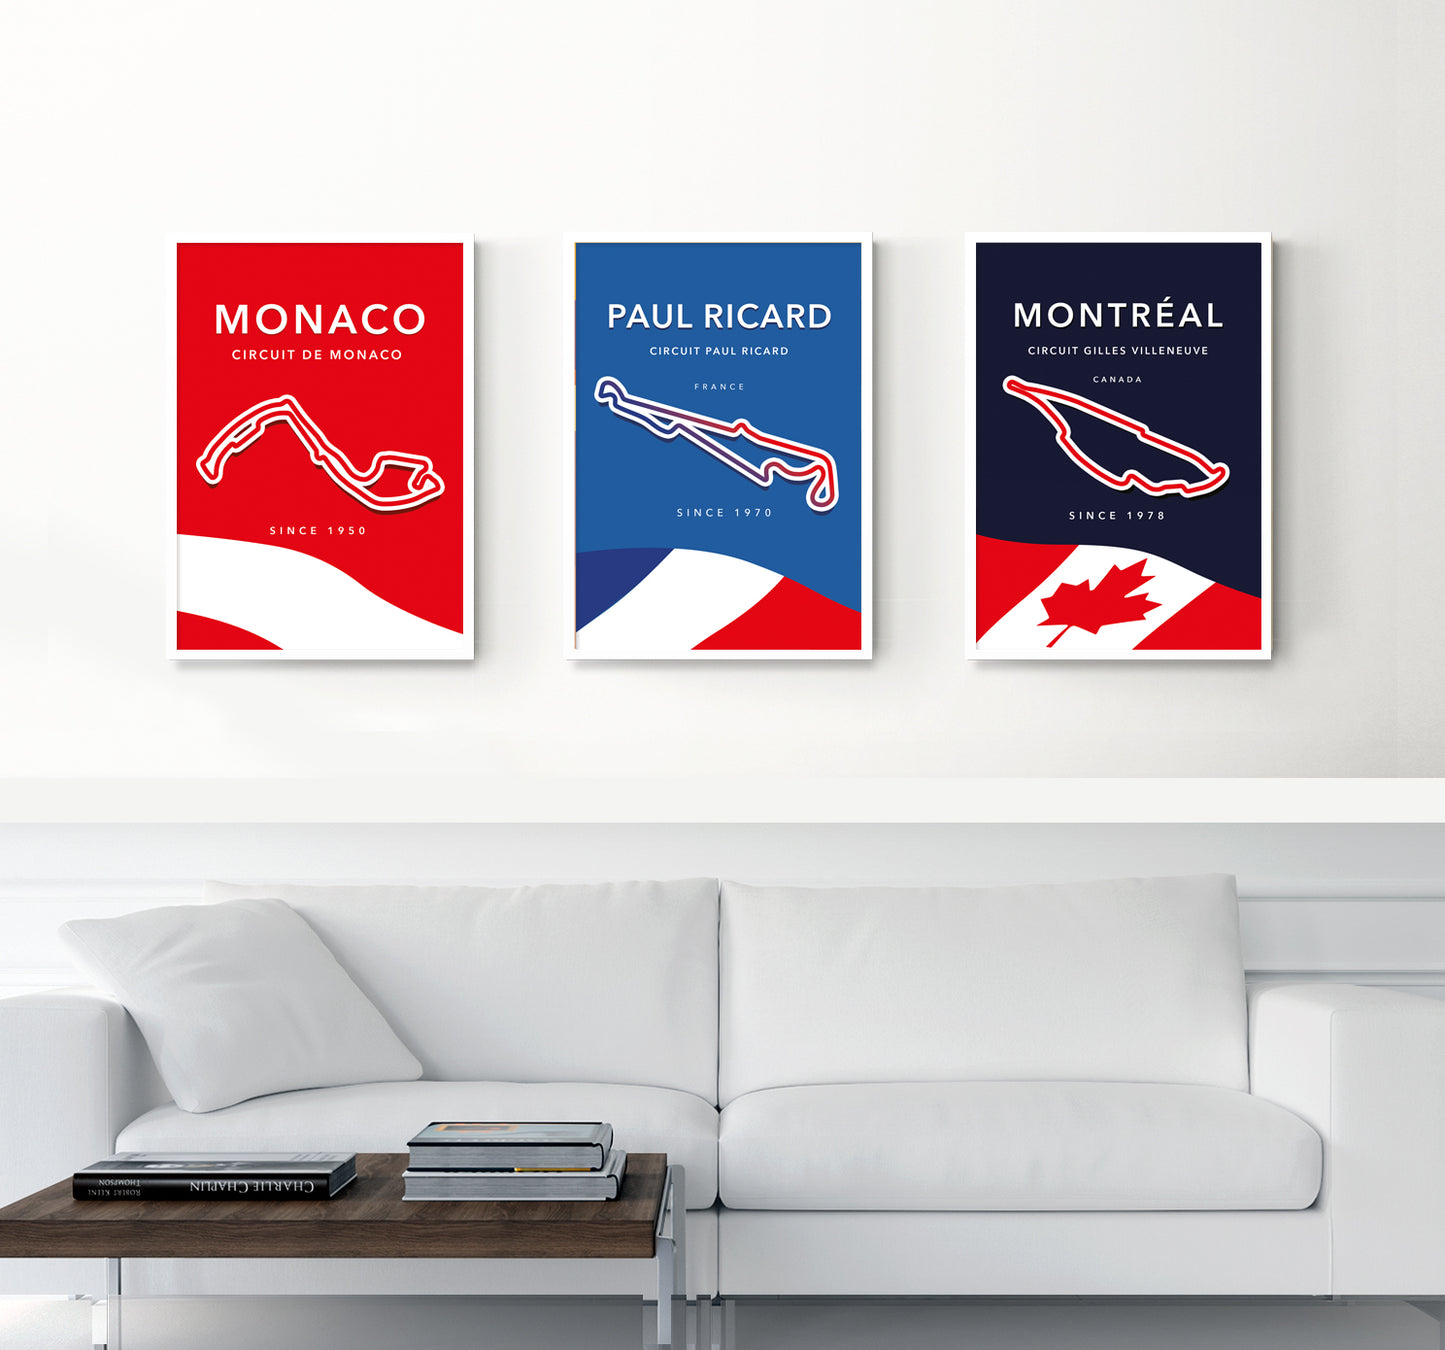 Paul Ricard F1 Circuit Poster / Formula-1 French Grand Prix / F1 Racing Track/